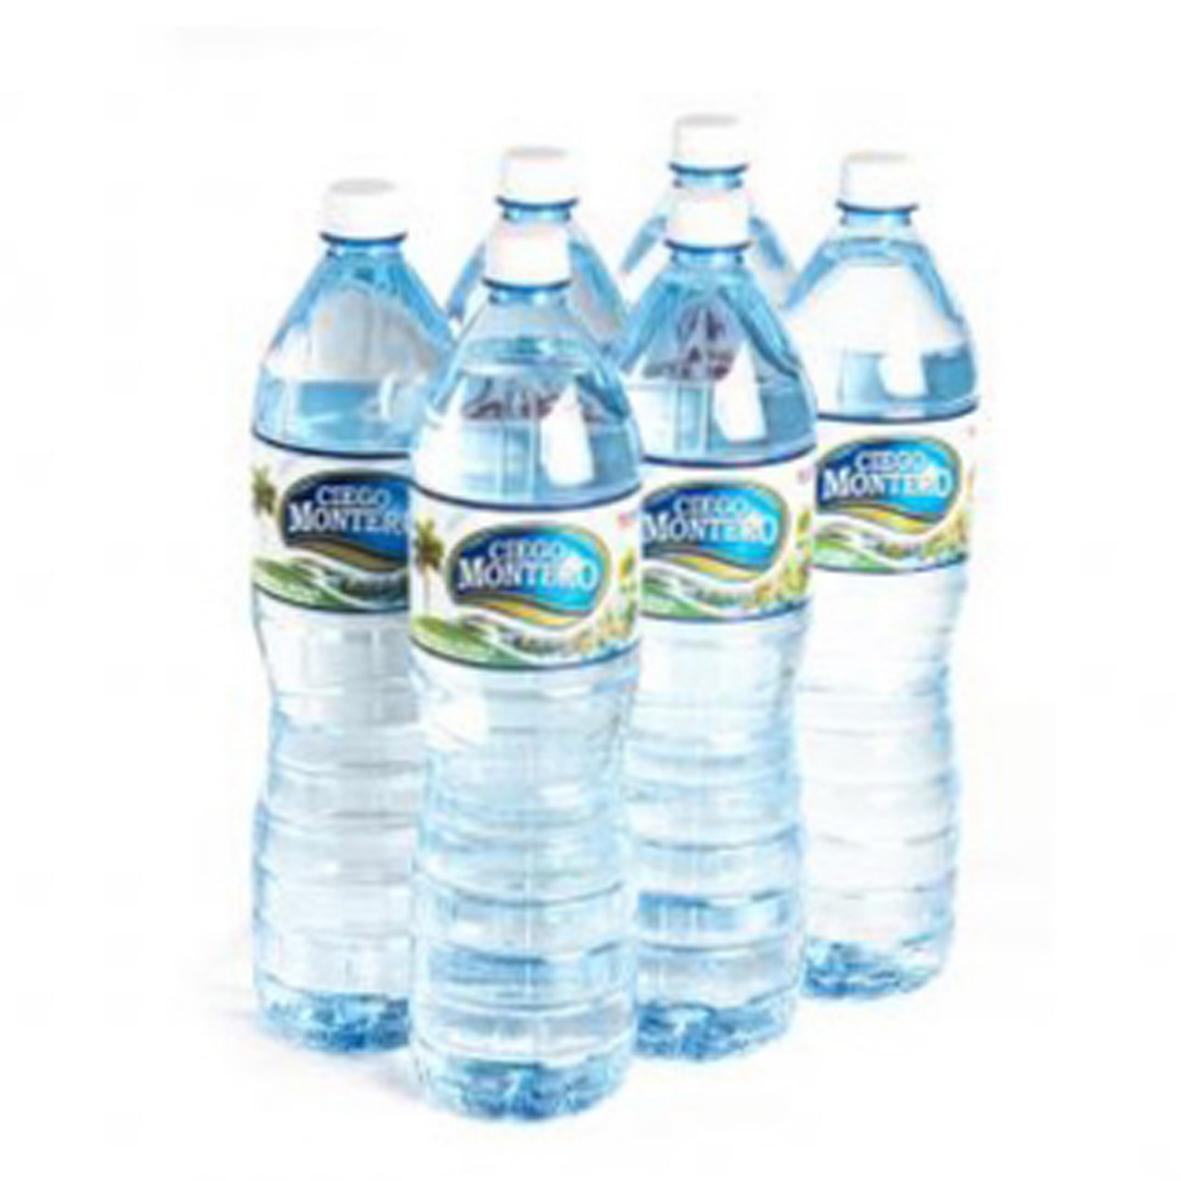 Agua natural Ciego Montero (6 x 1500 ml)